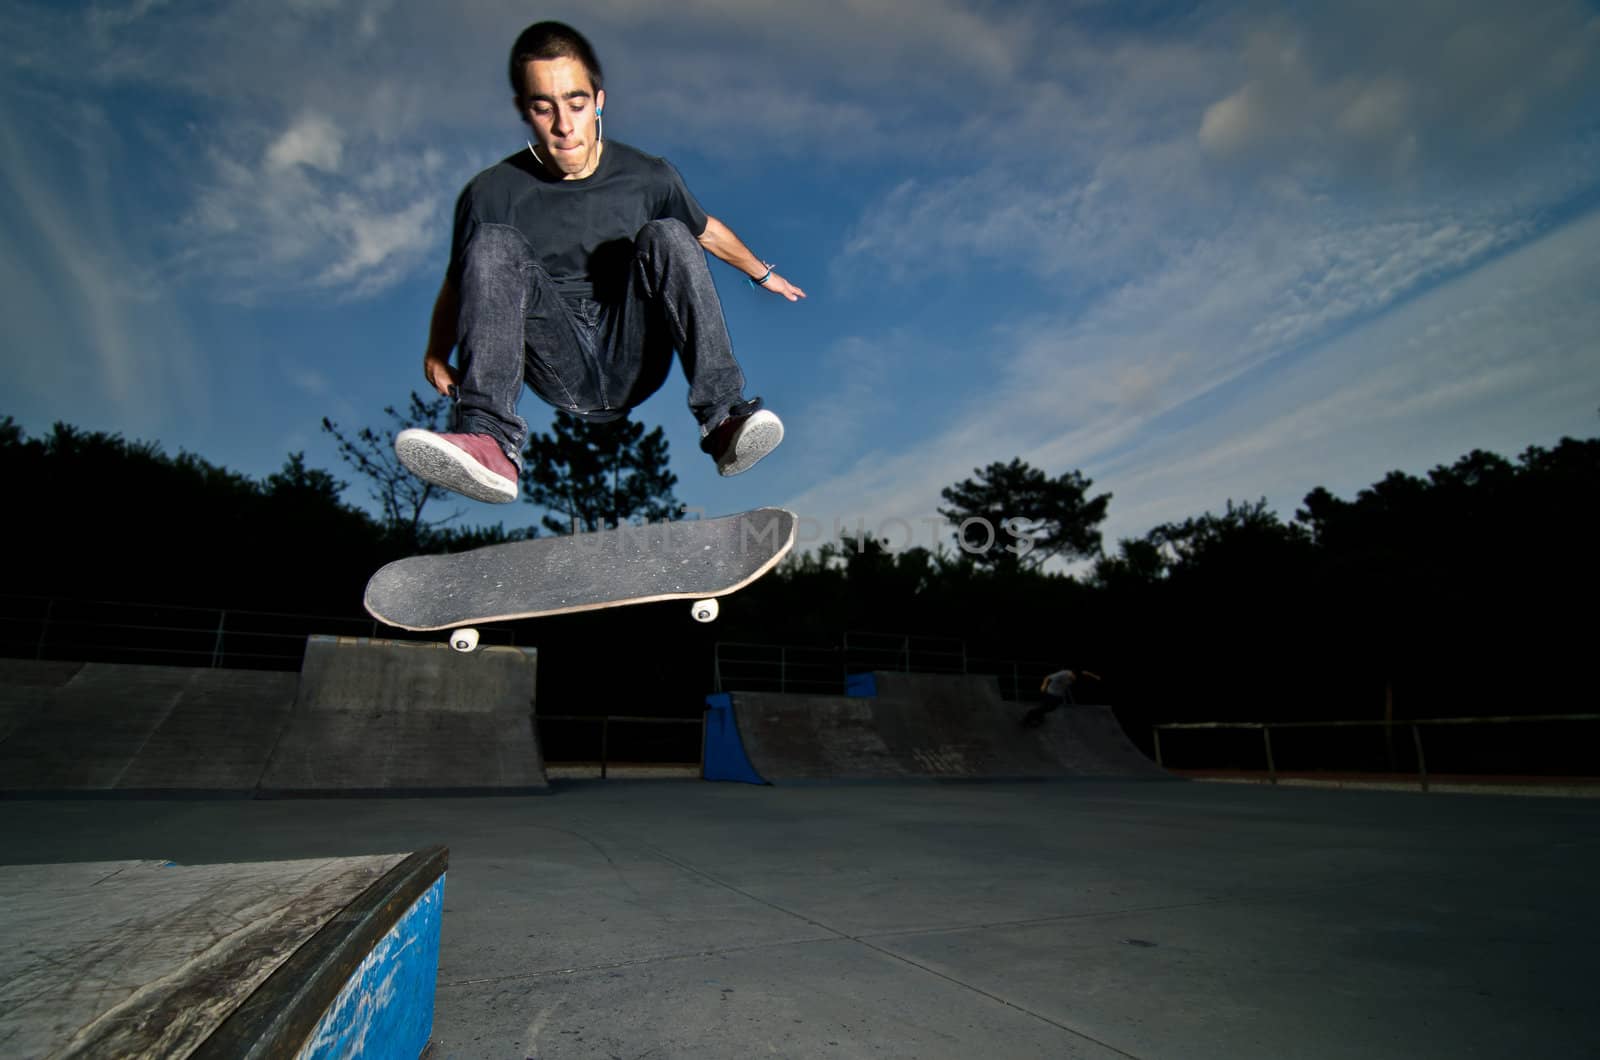 Skateboarder on a flip trick by homydesign